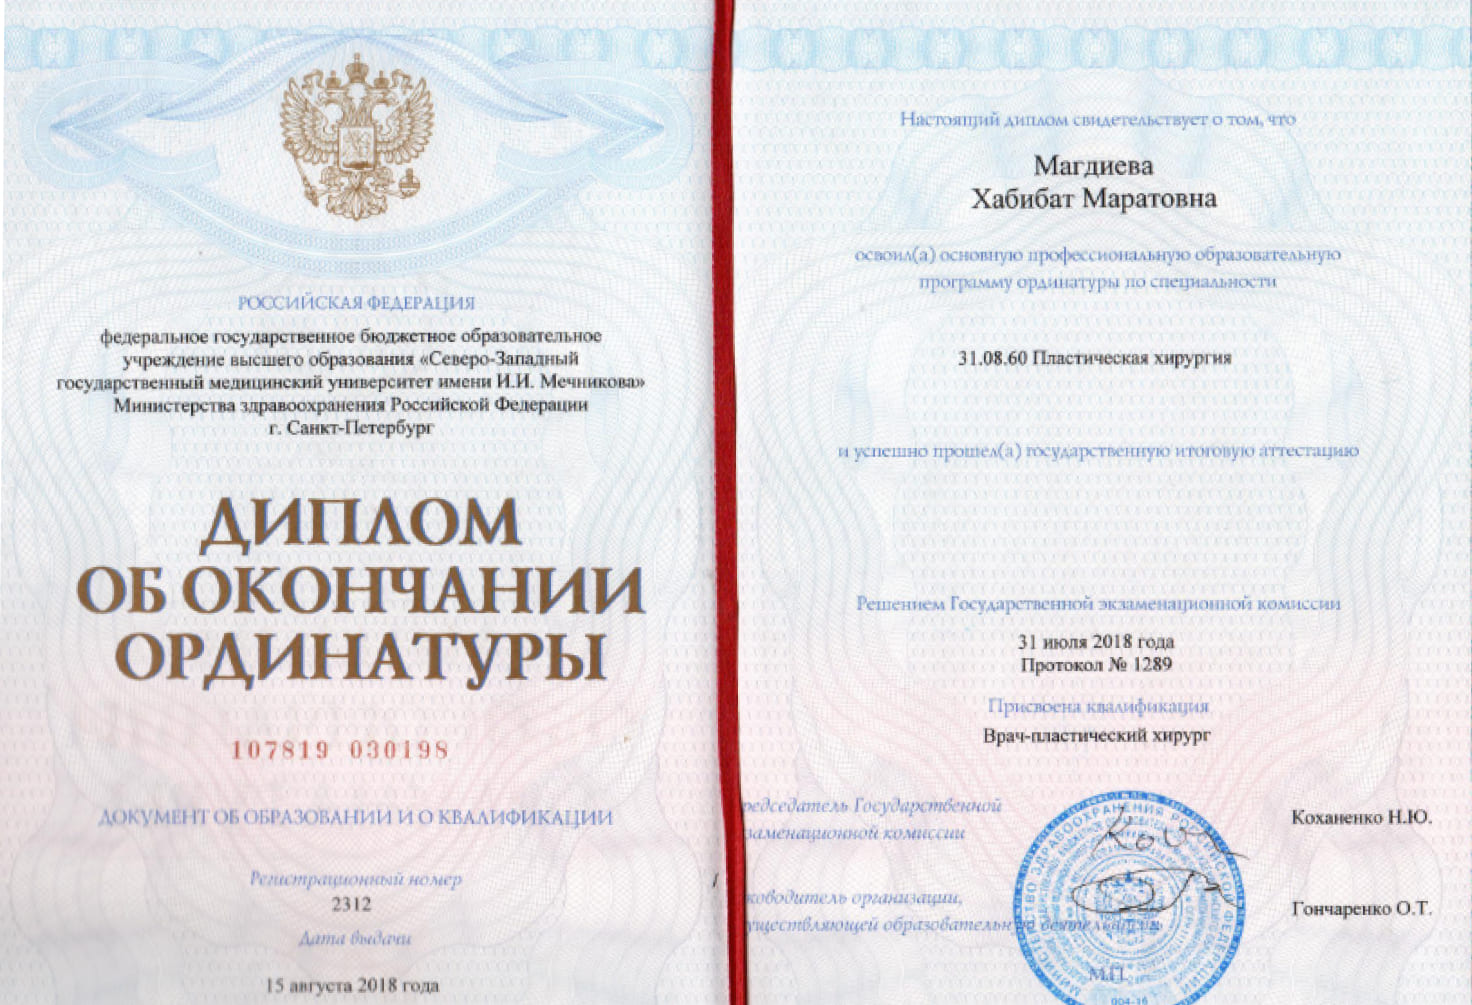 Residency Diploma